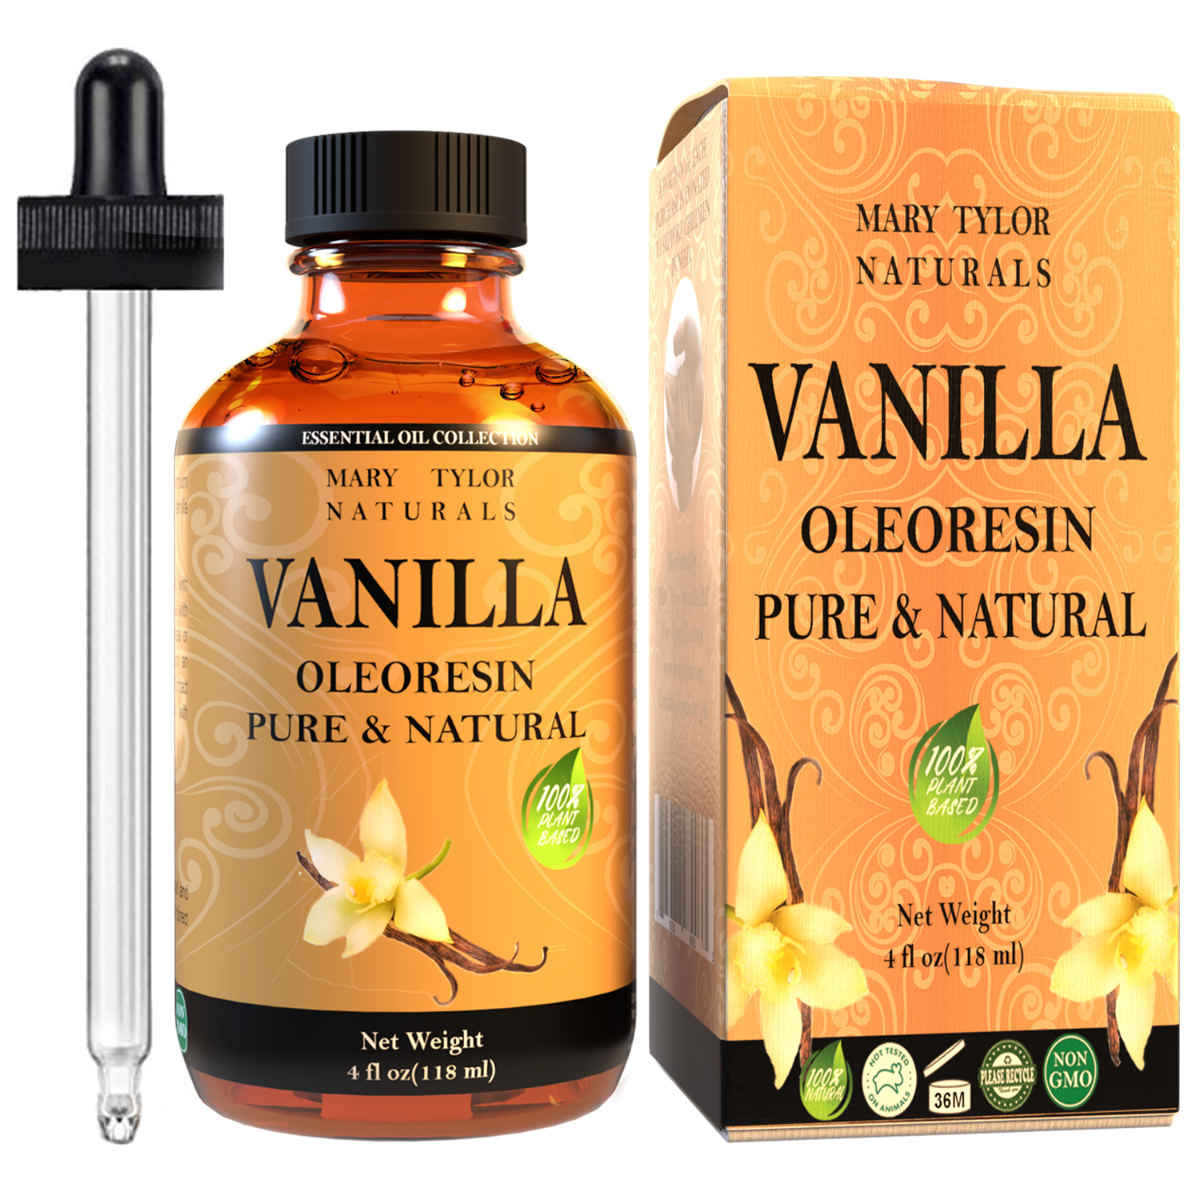 YoungLiving  Product Vanilla